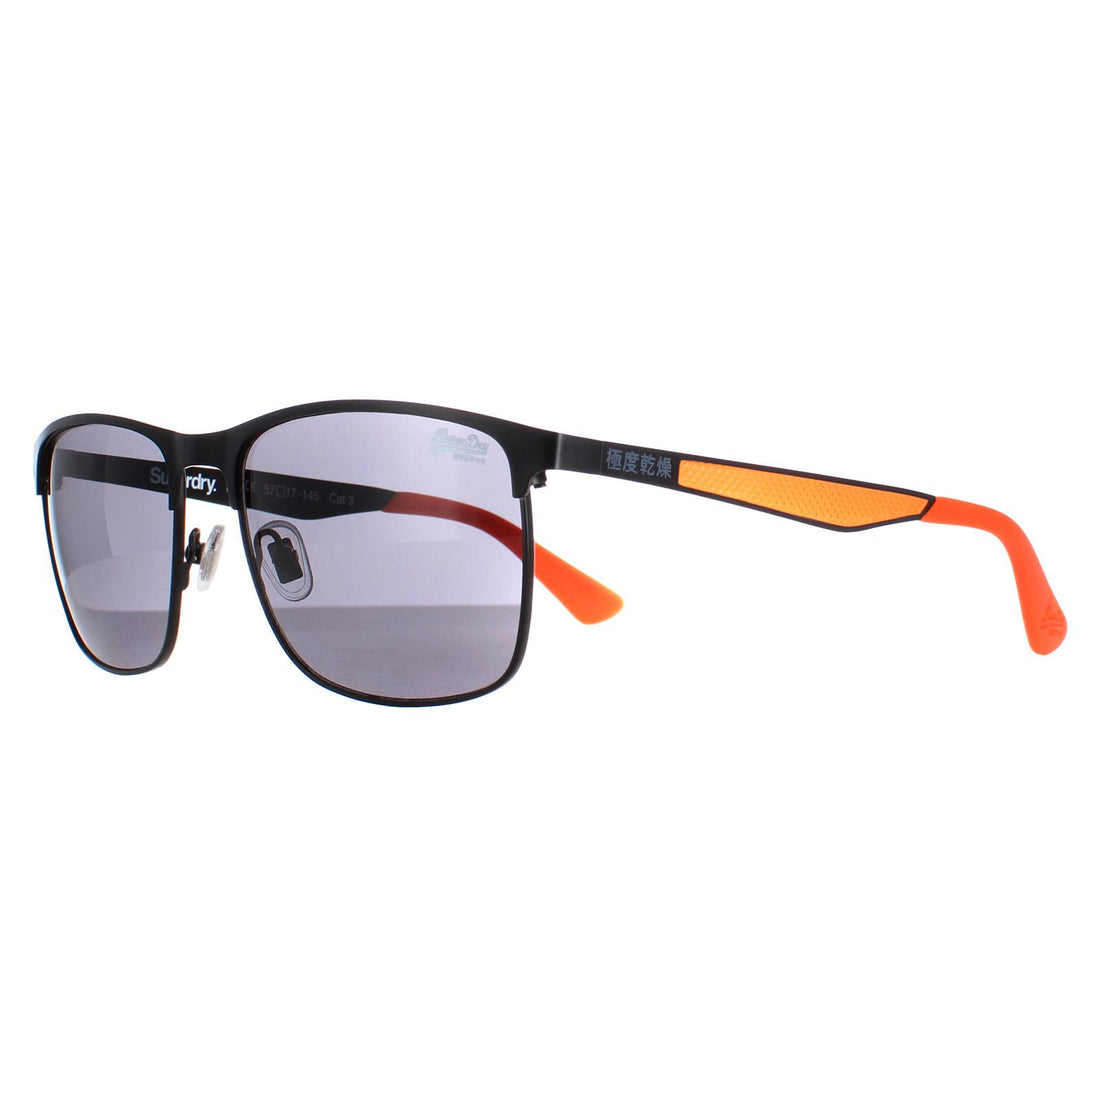 Superdry Sunglasses Ace SDS 025 Matte Black Grey